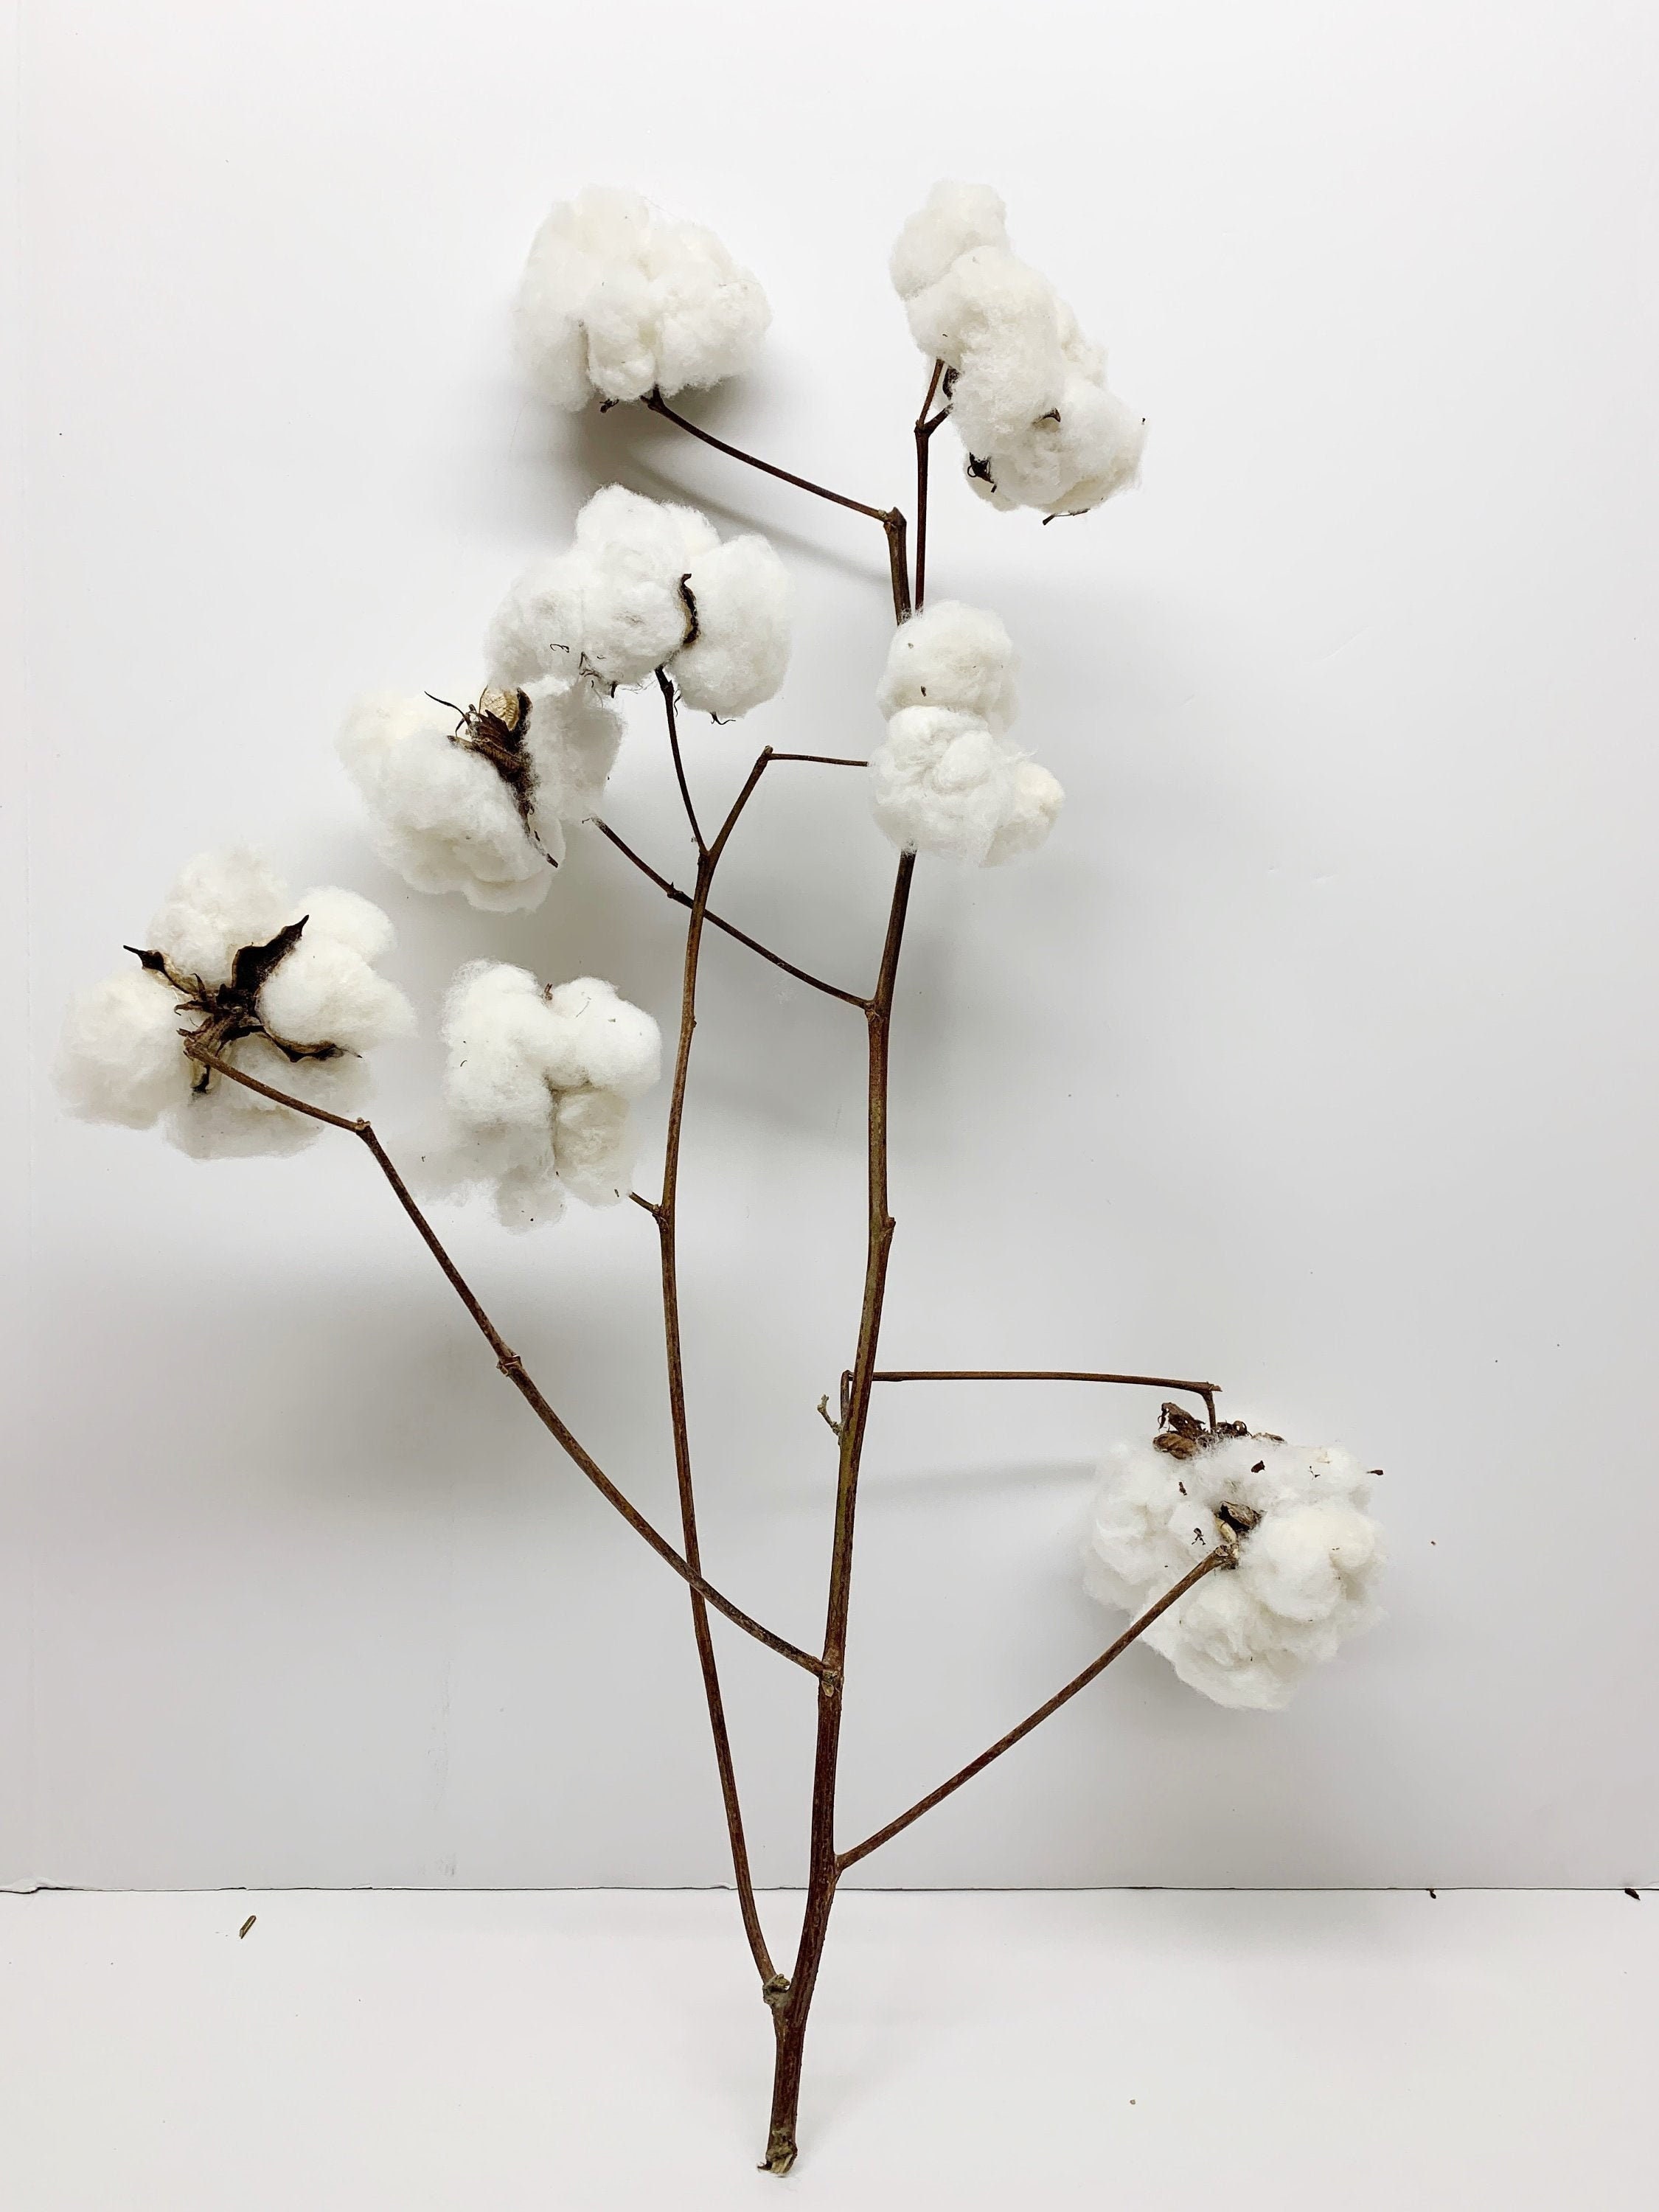 Cotton Stems Real Cotton Flowers Dried Cotton Picks Stalks - Temu